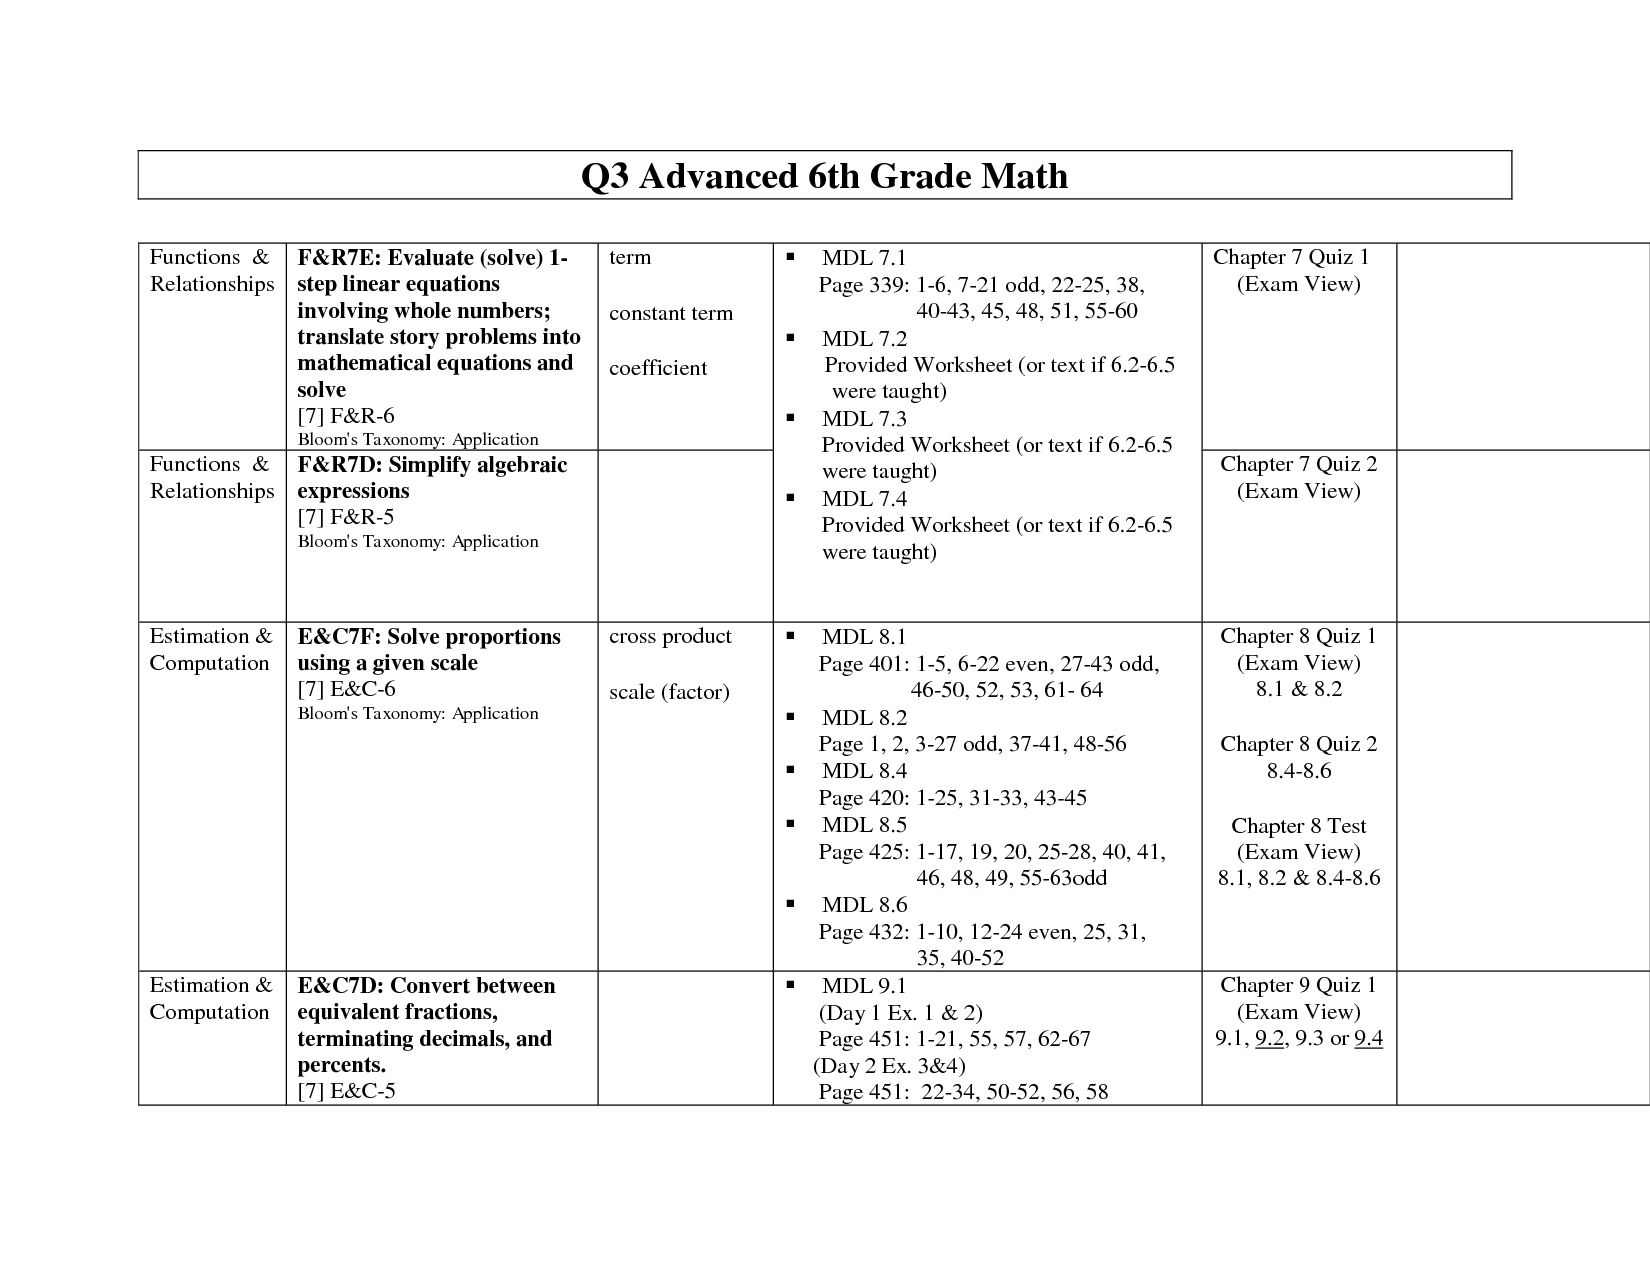 Advanced 6th Grade Math Worksheets Image